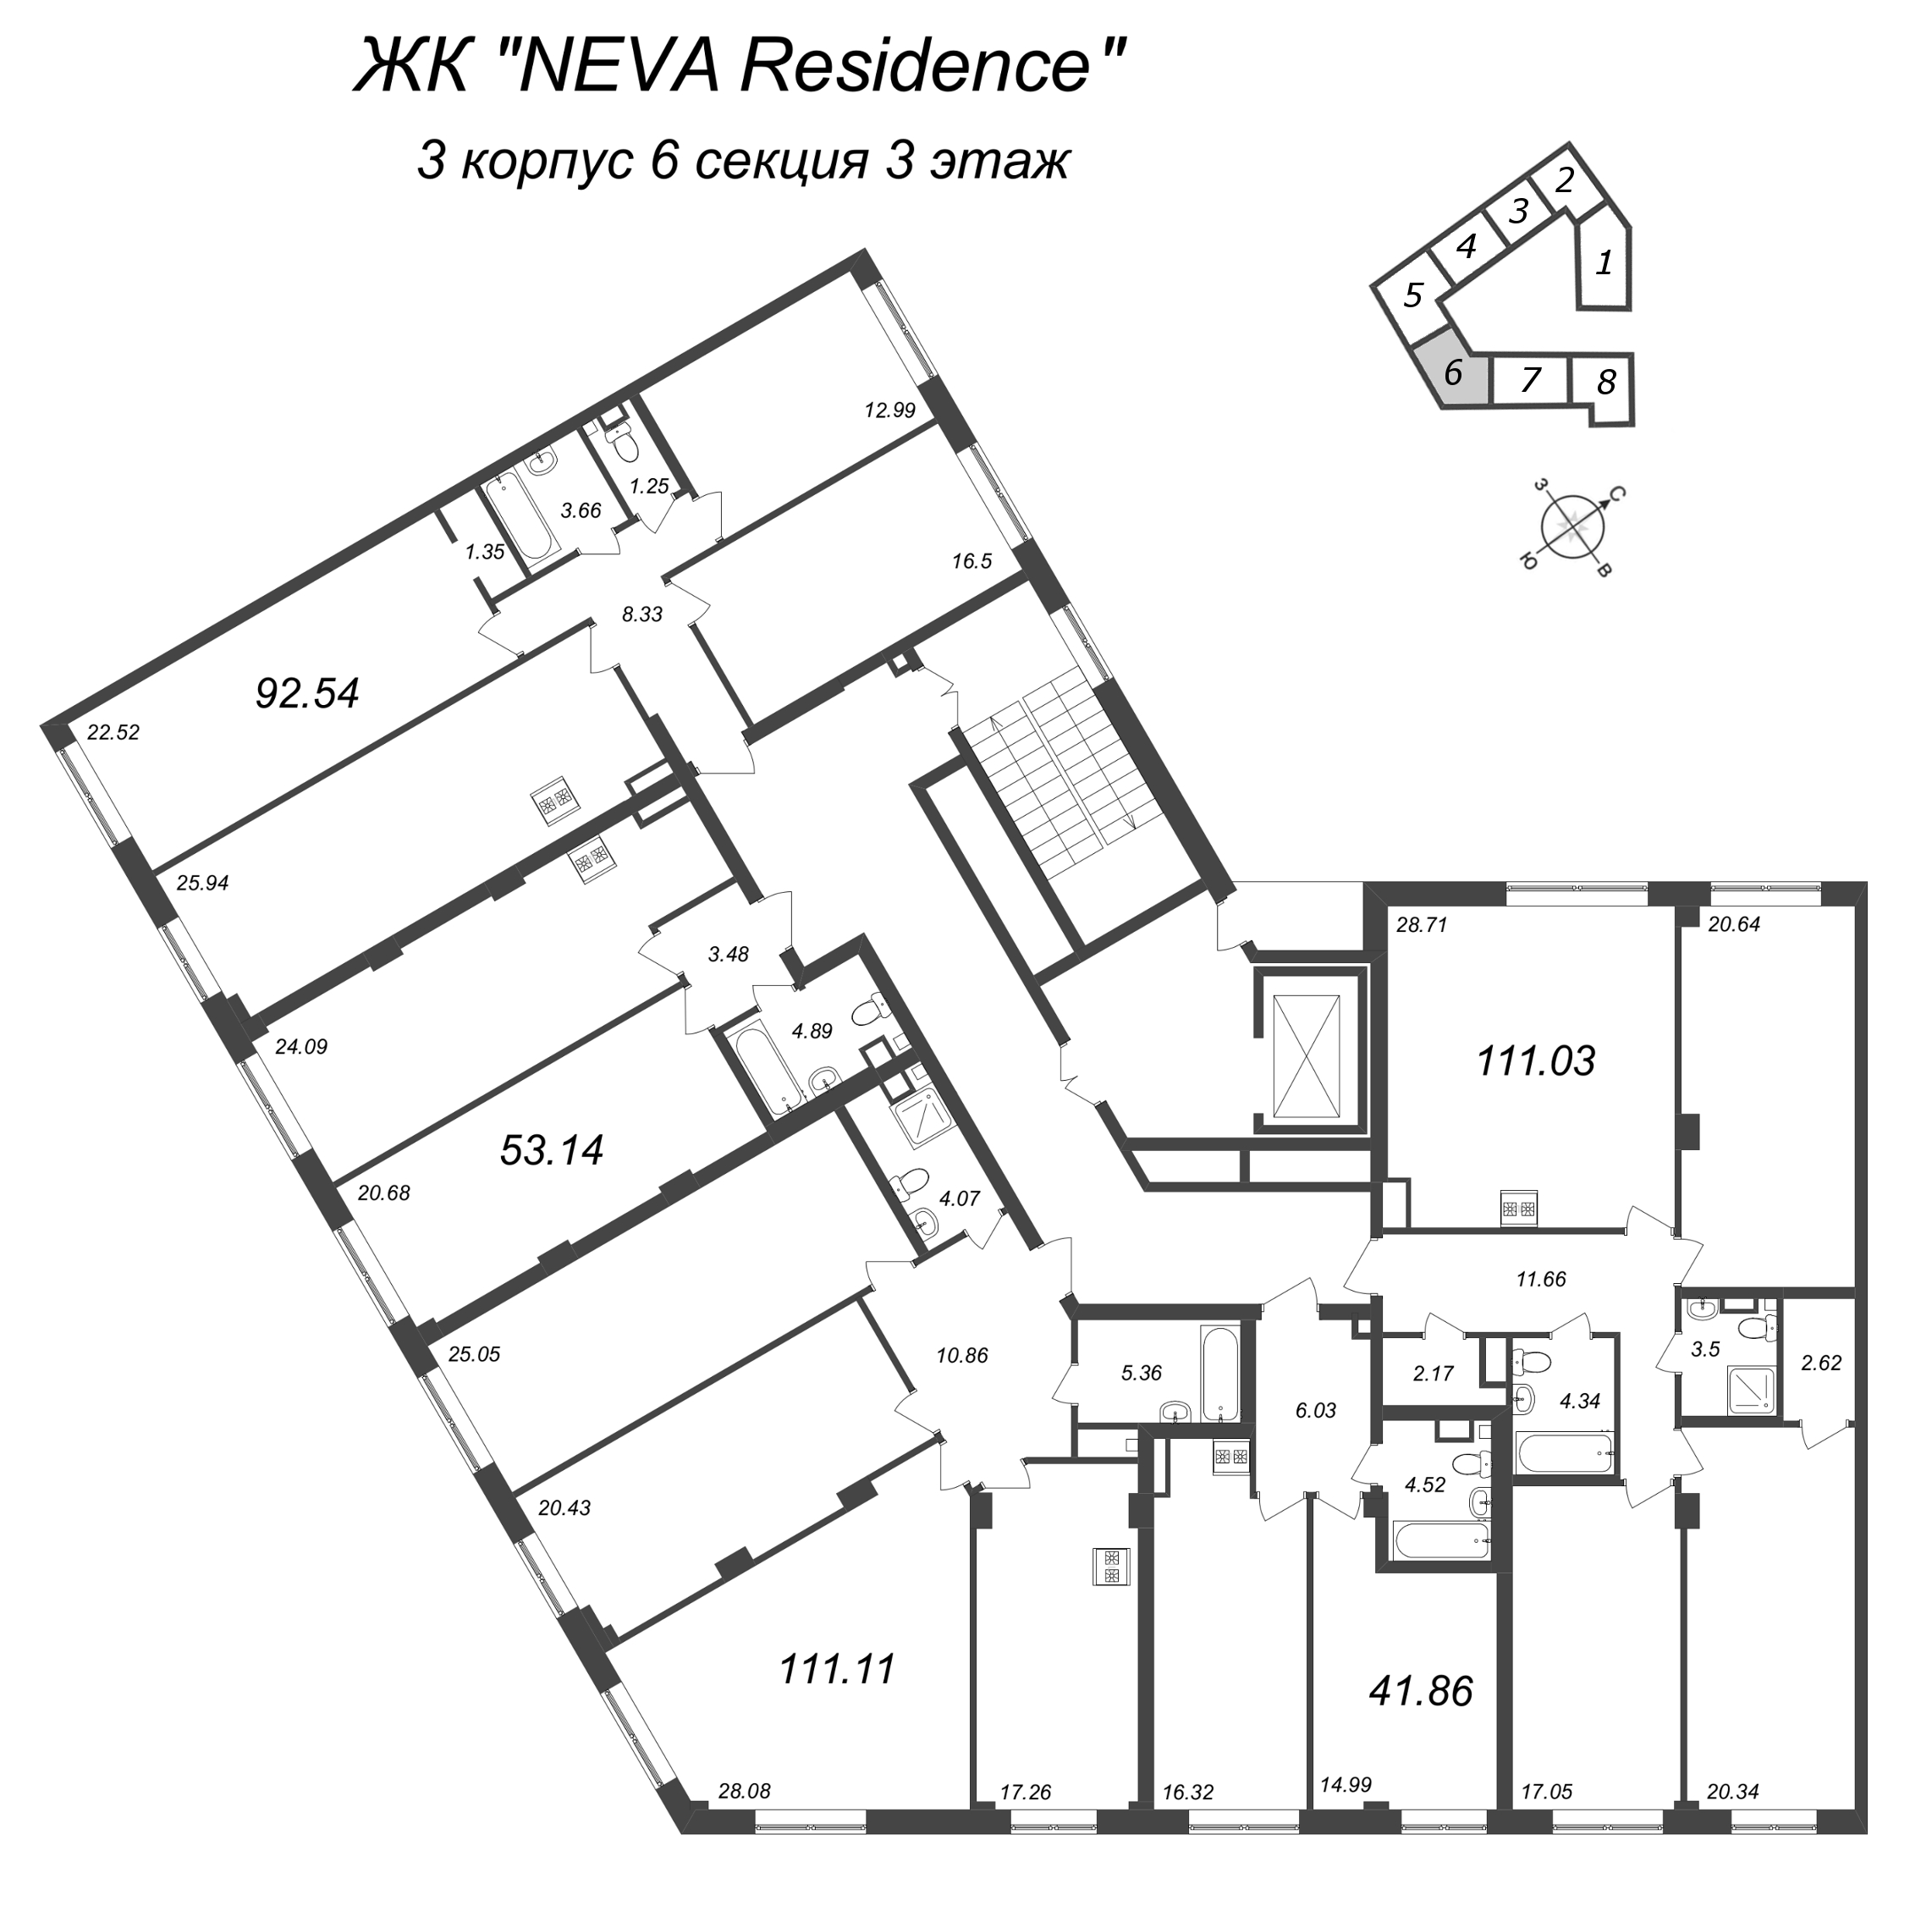 4-комнатная (Евро) квартира, 111.03 м² - планировка этажа